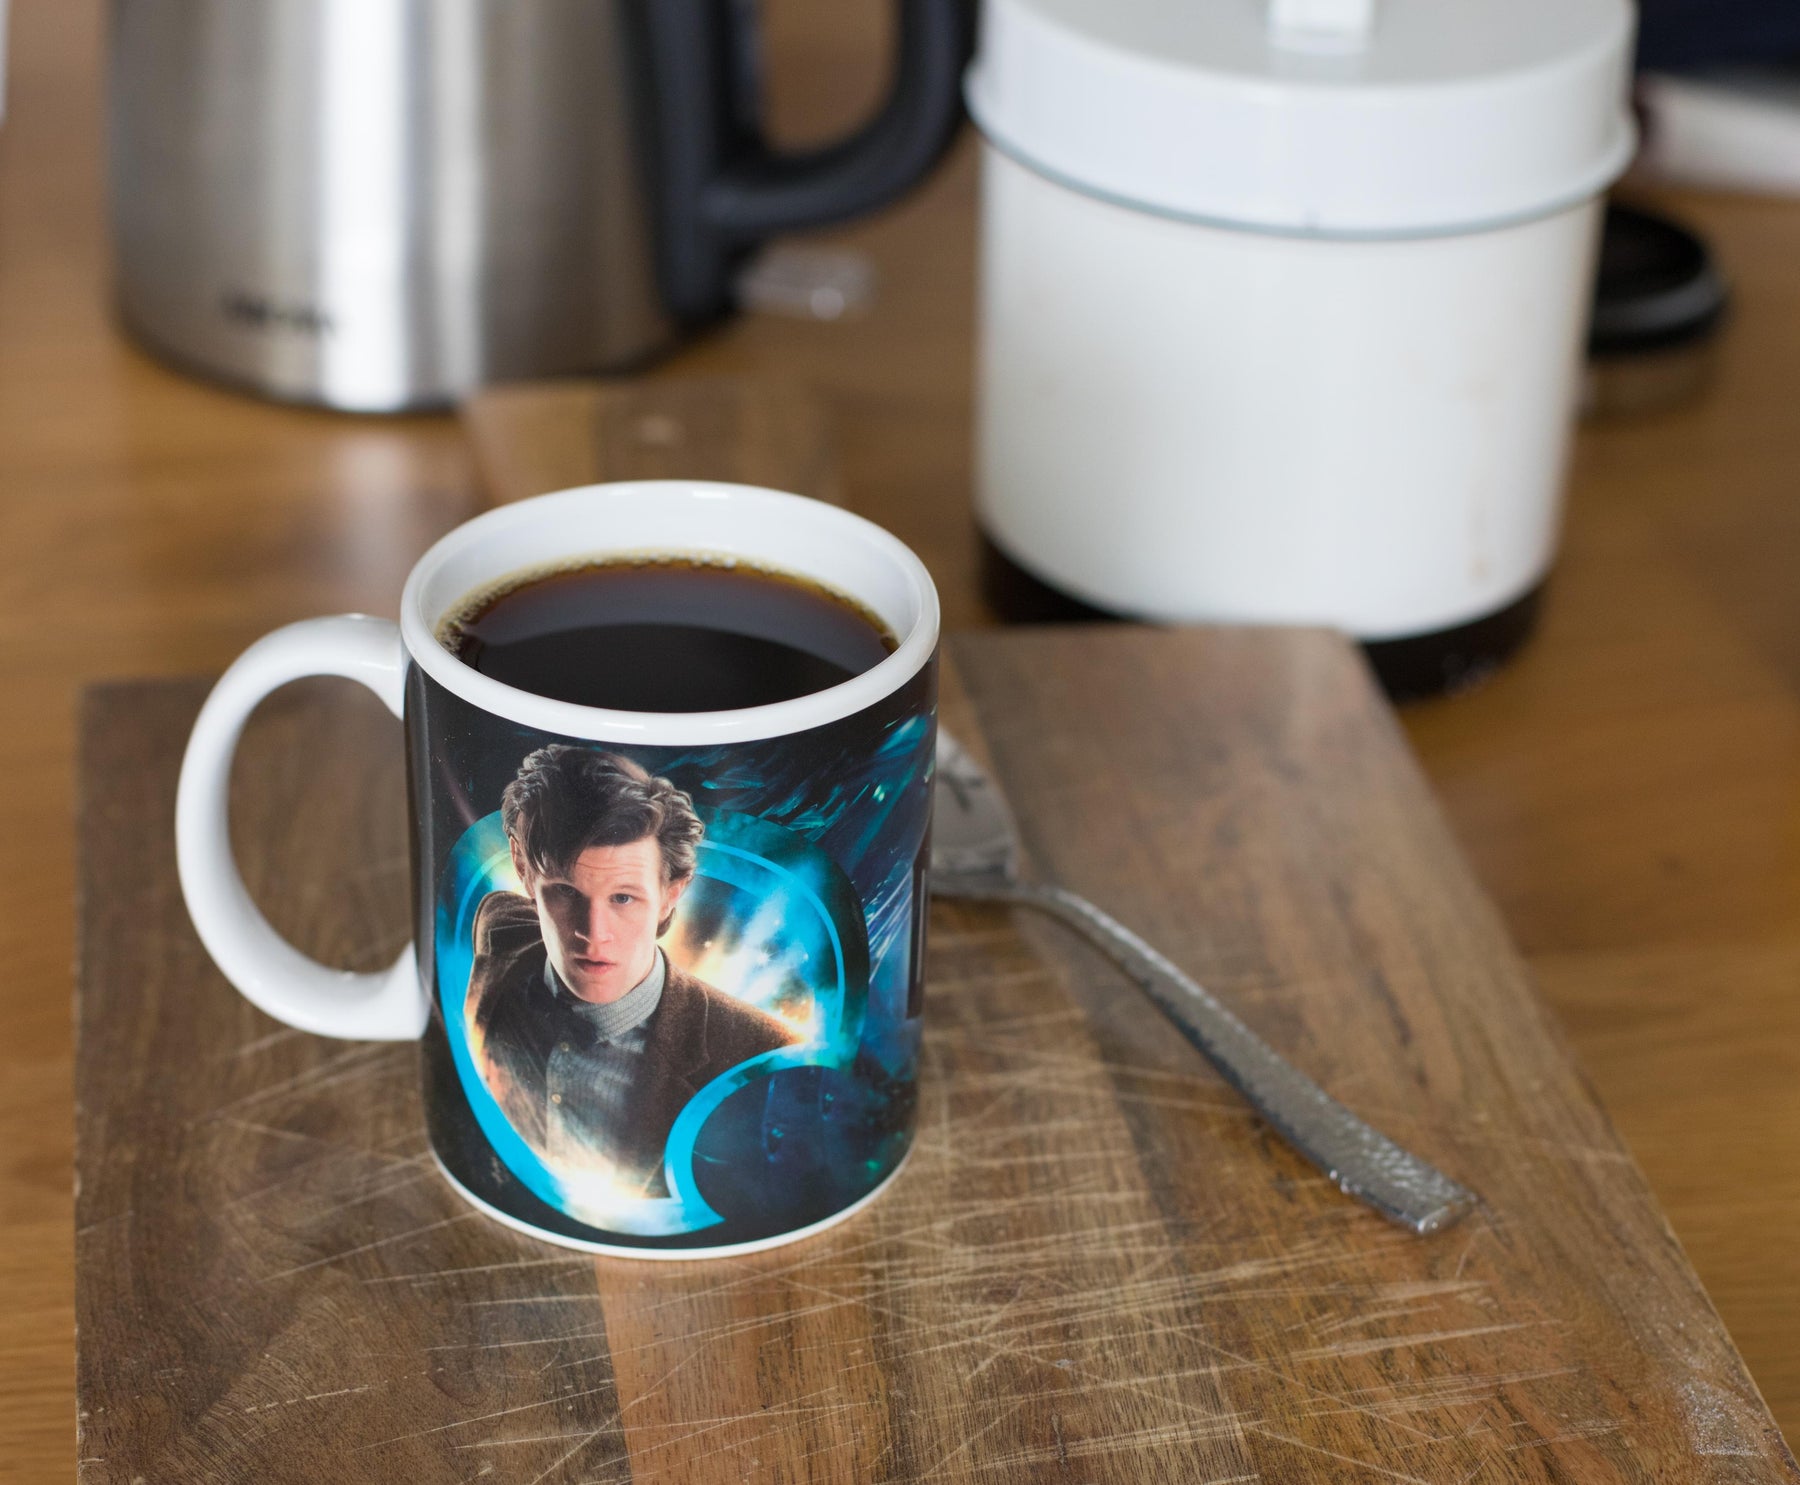 Doctor Who 11th Dr Matt Smith 11oz Ceramic Coffee Mug for Home & Office